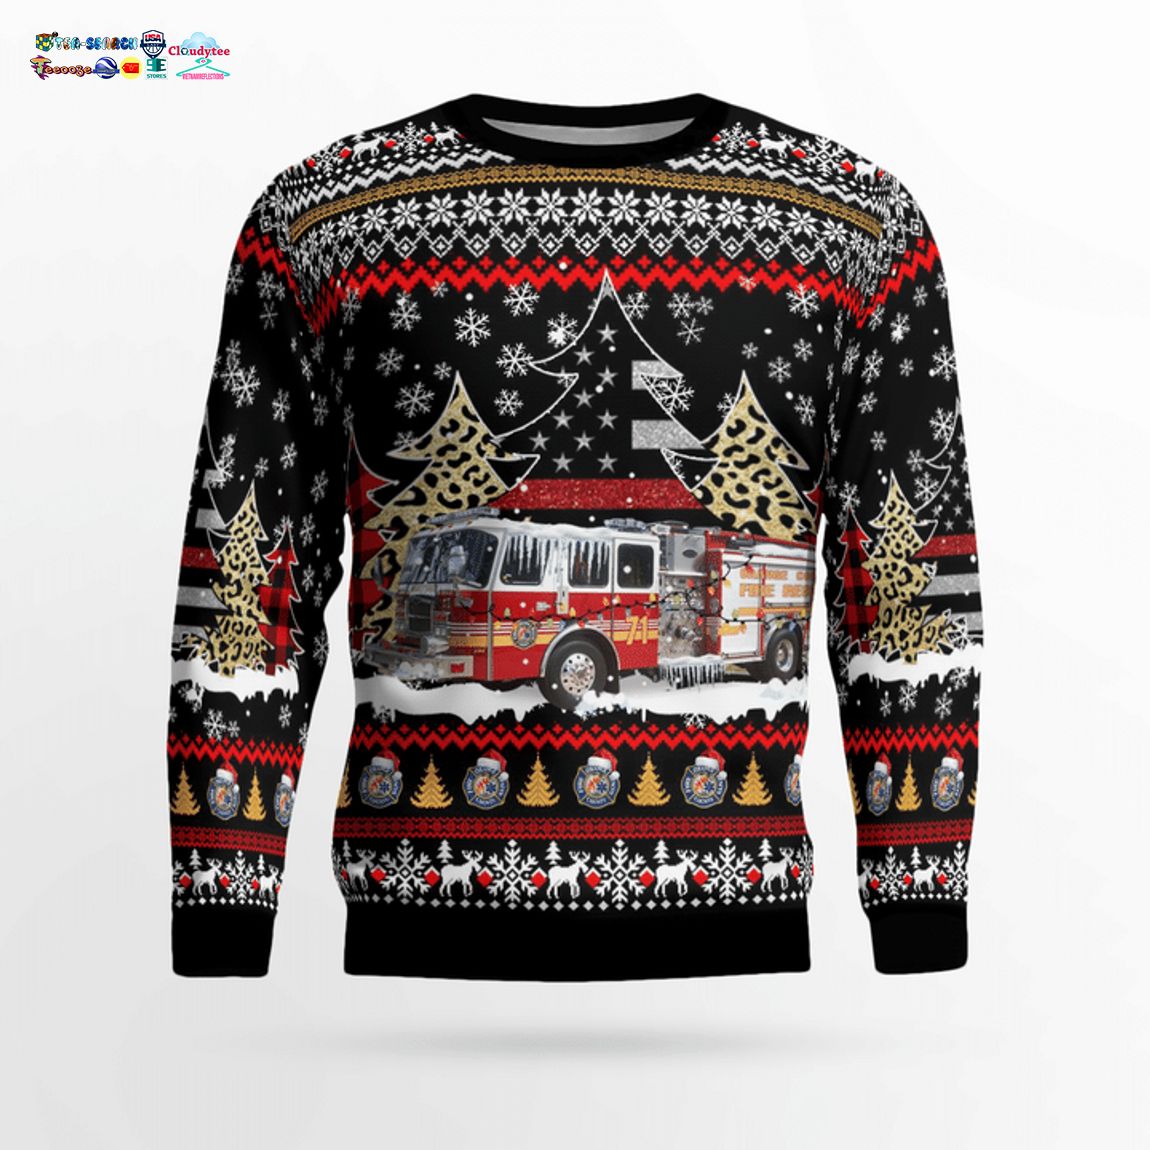 Florida Orange County Fire Rescue Department 3D Christmas Sweater - Saleoff